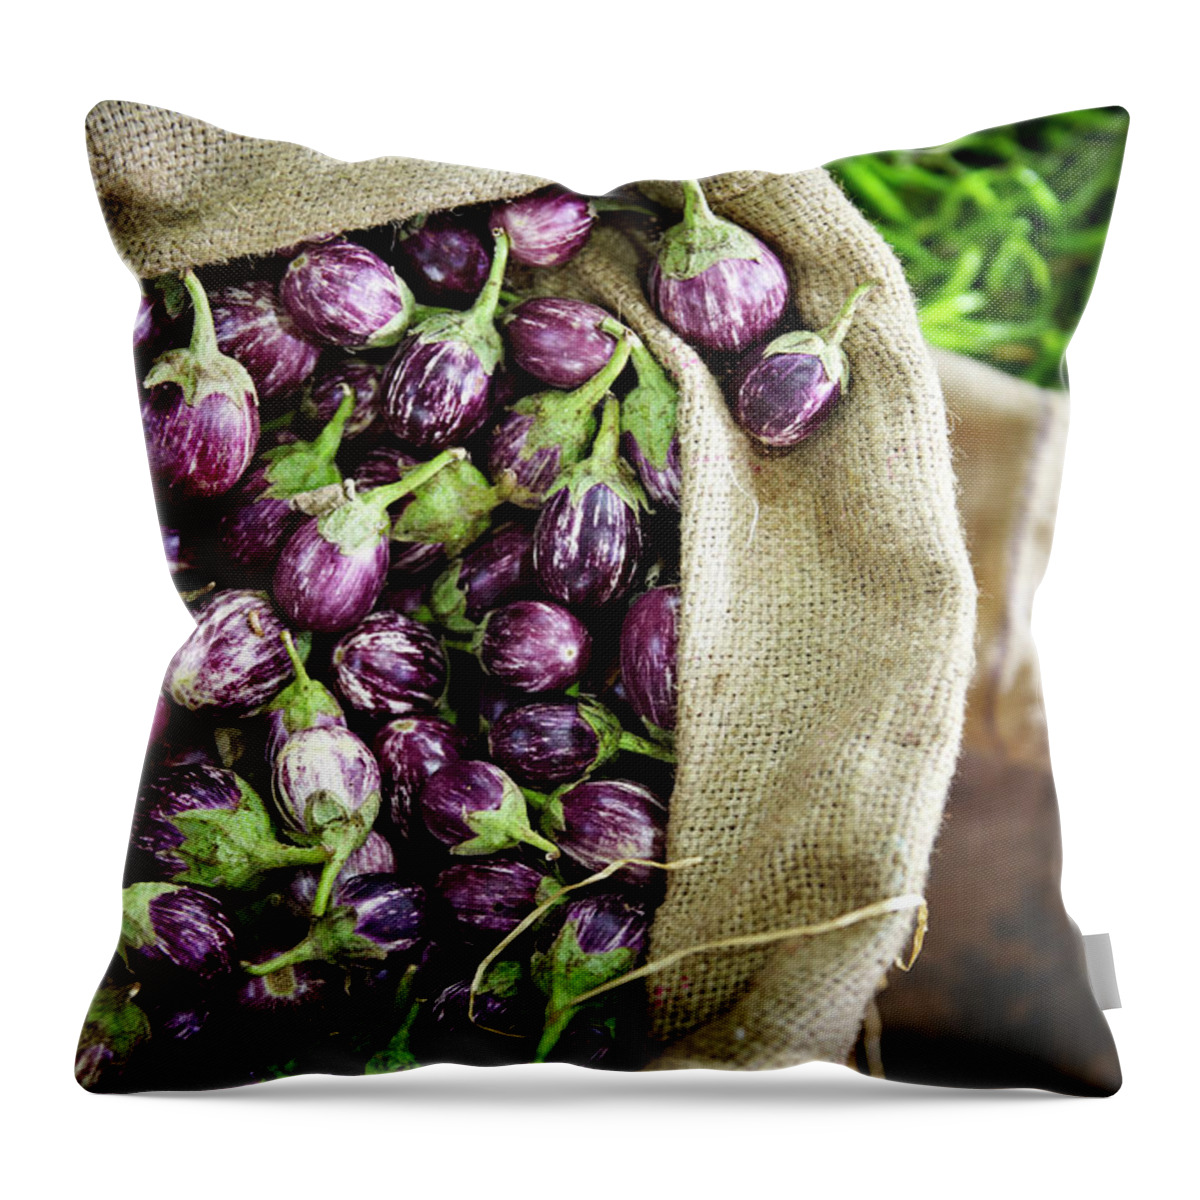 Retail Throw Pillow featuring the photograph Kerelan Eggplant by Matthew Leete